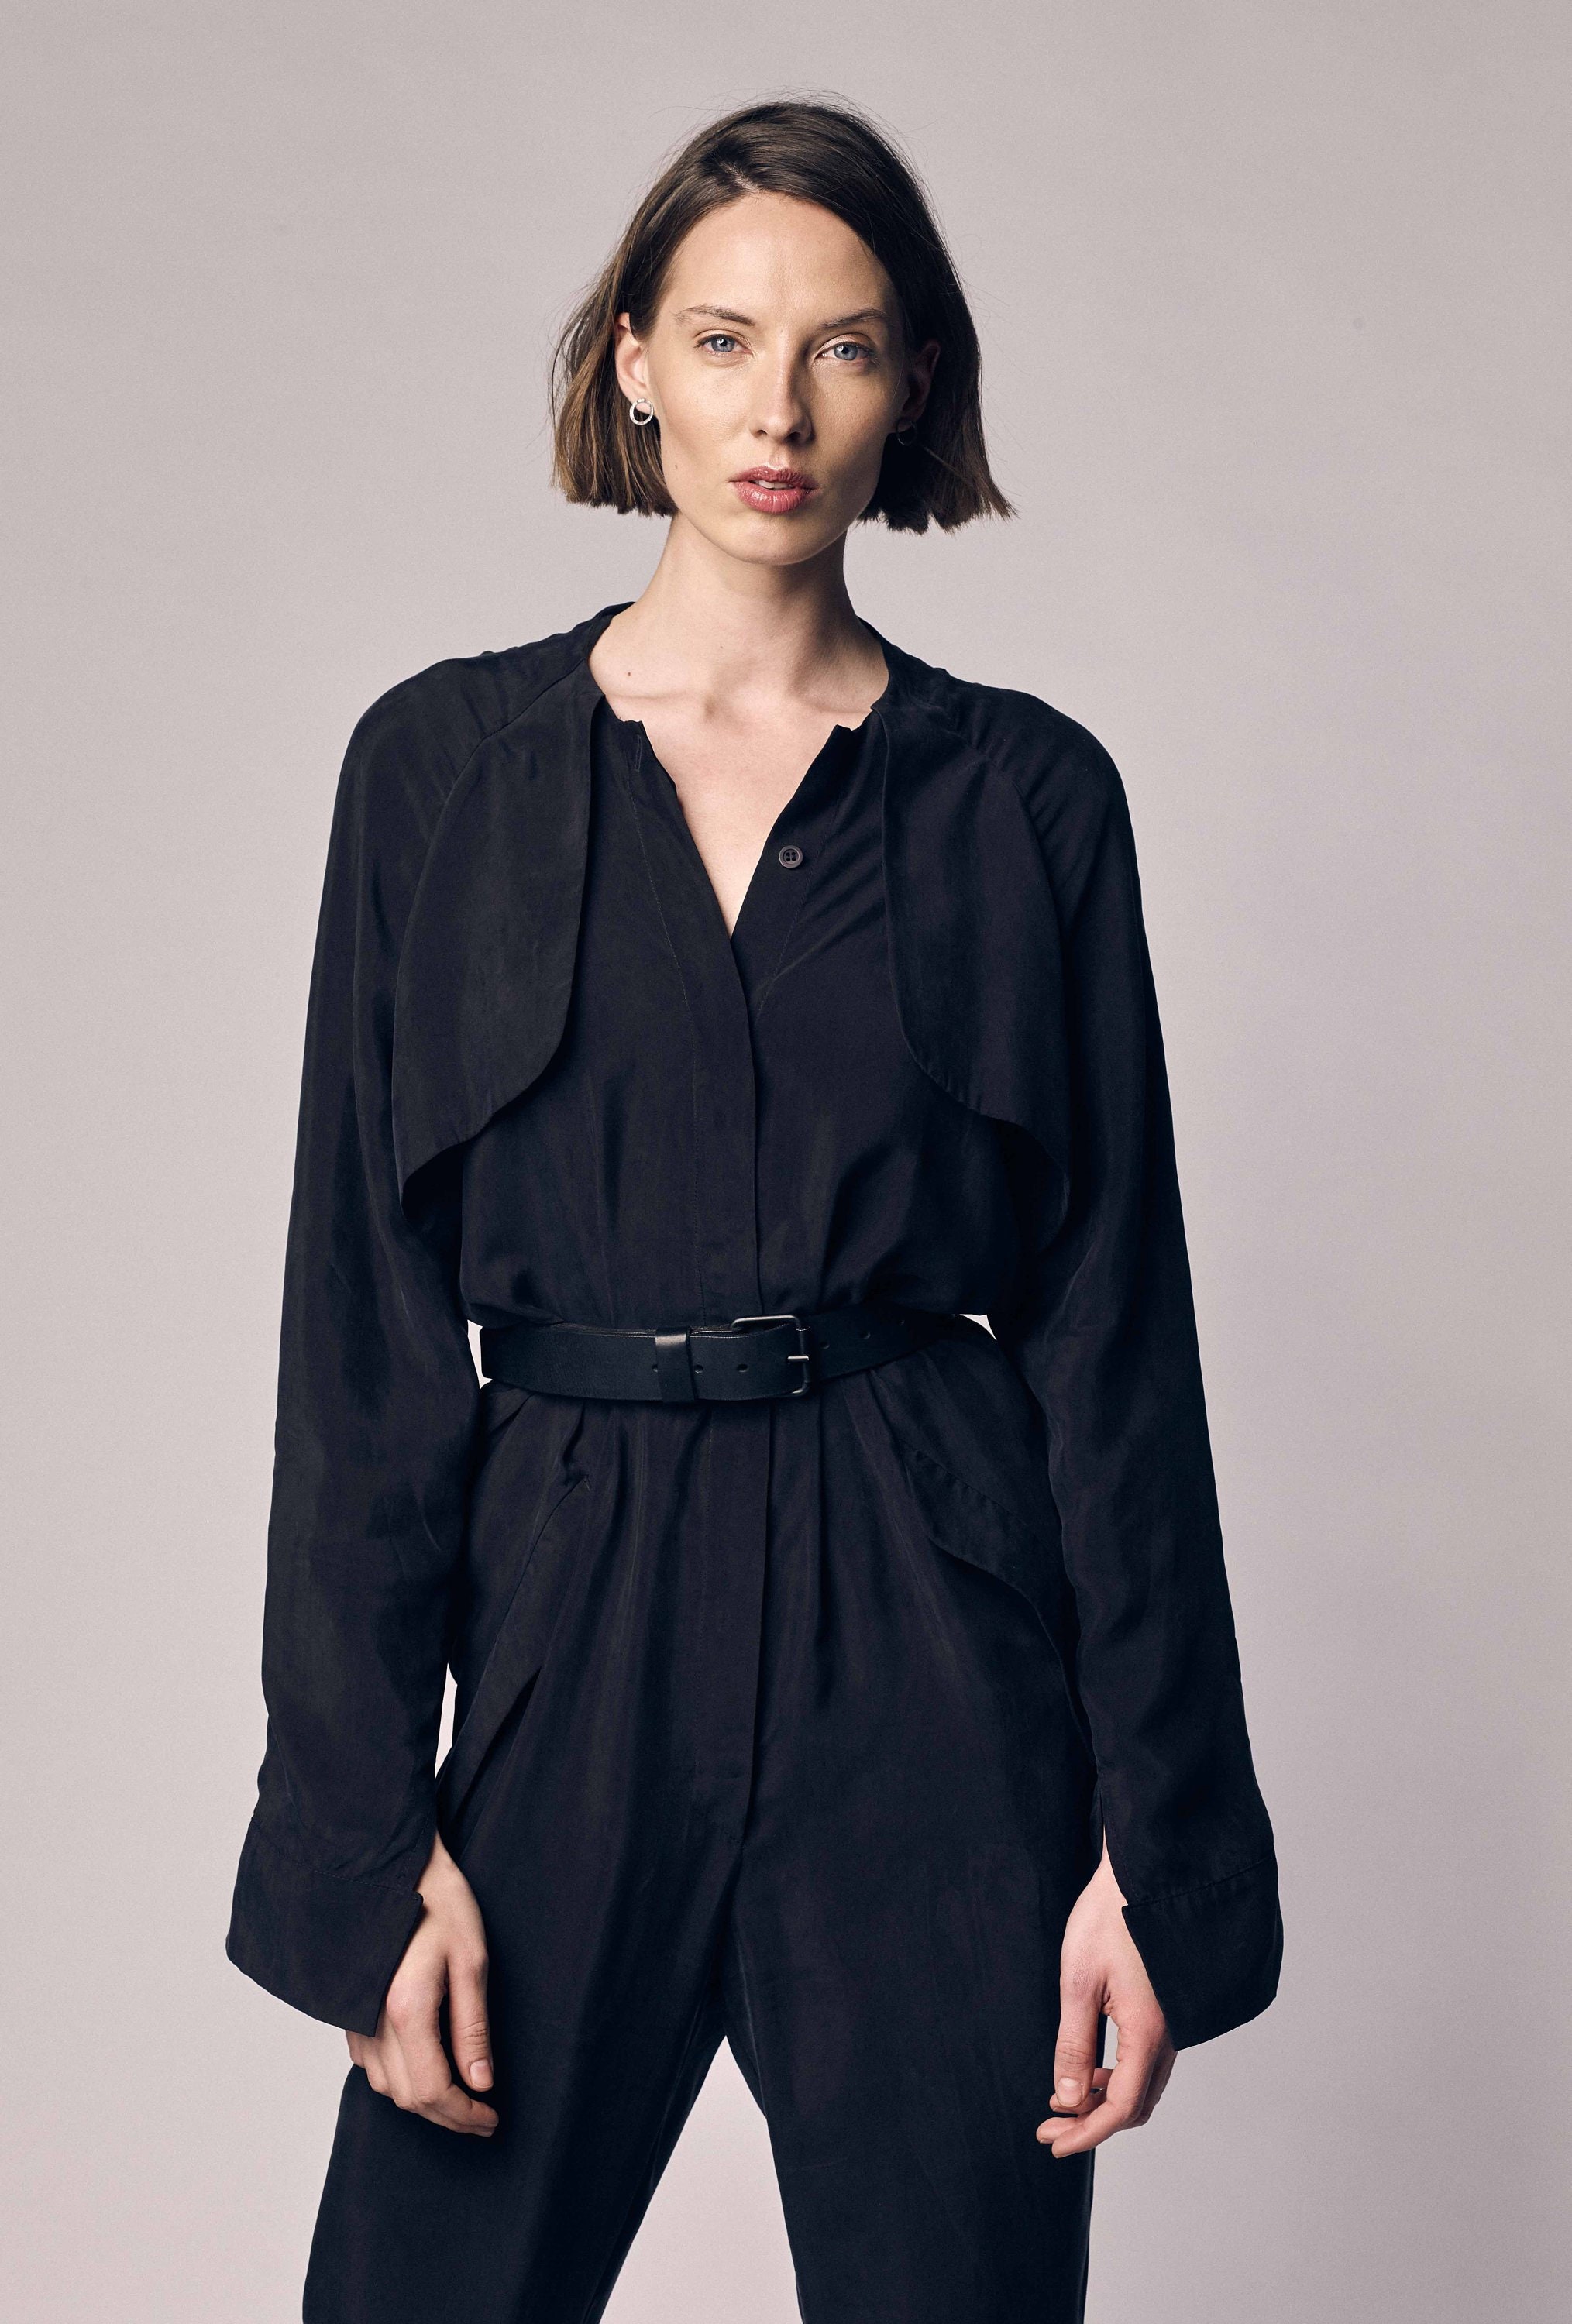 Black Cupro Fabric Jumpsuit / Long Sleeve Jumpsuit / Black | Etsy